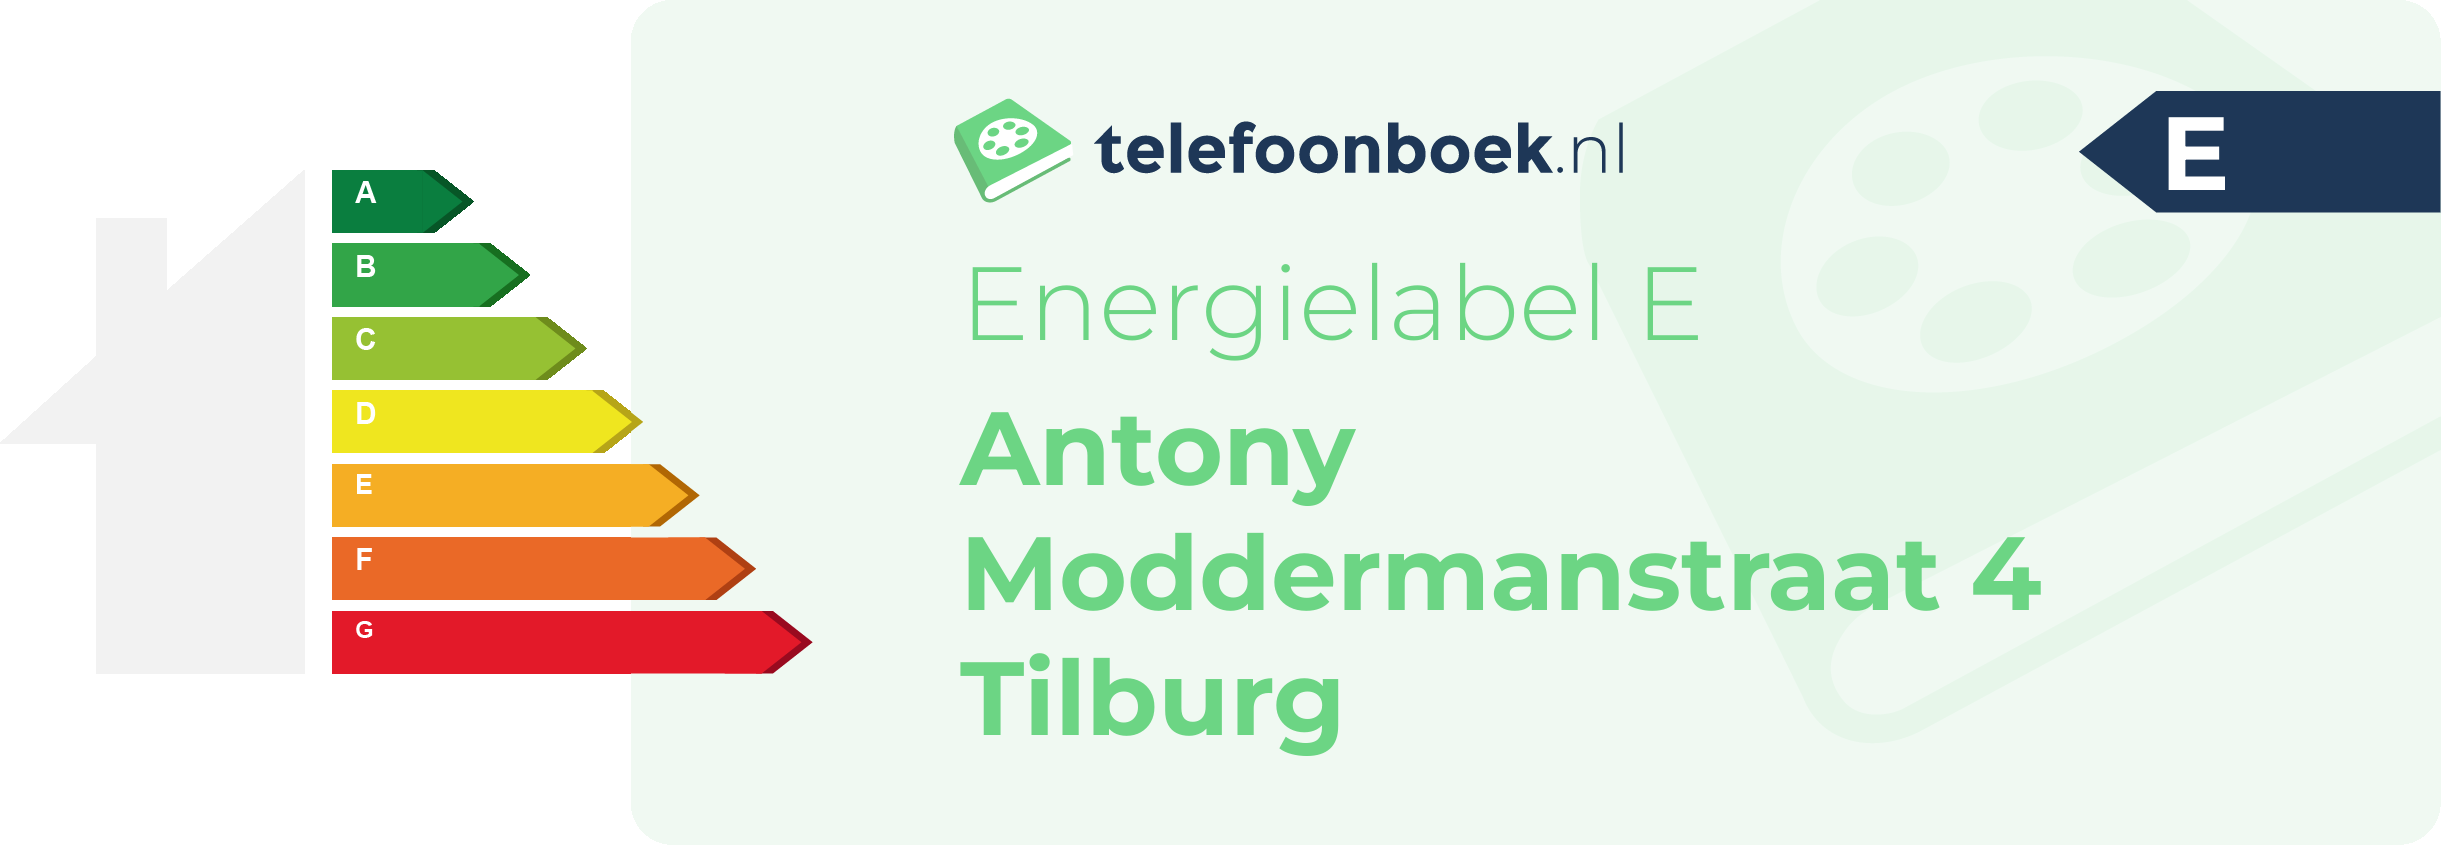 Energielabel Antony Moddermanstraat 4 Tilburg